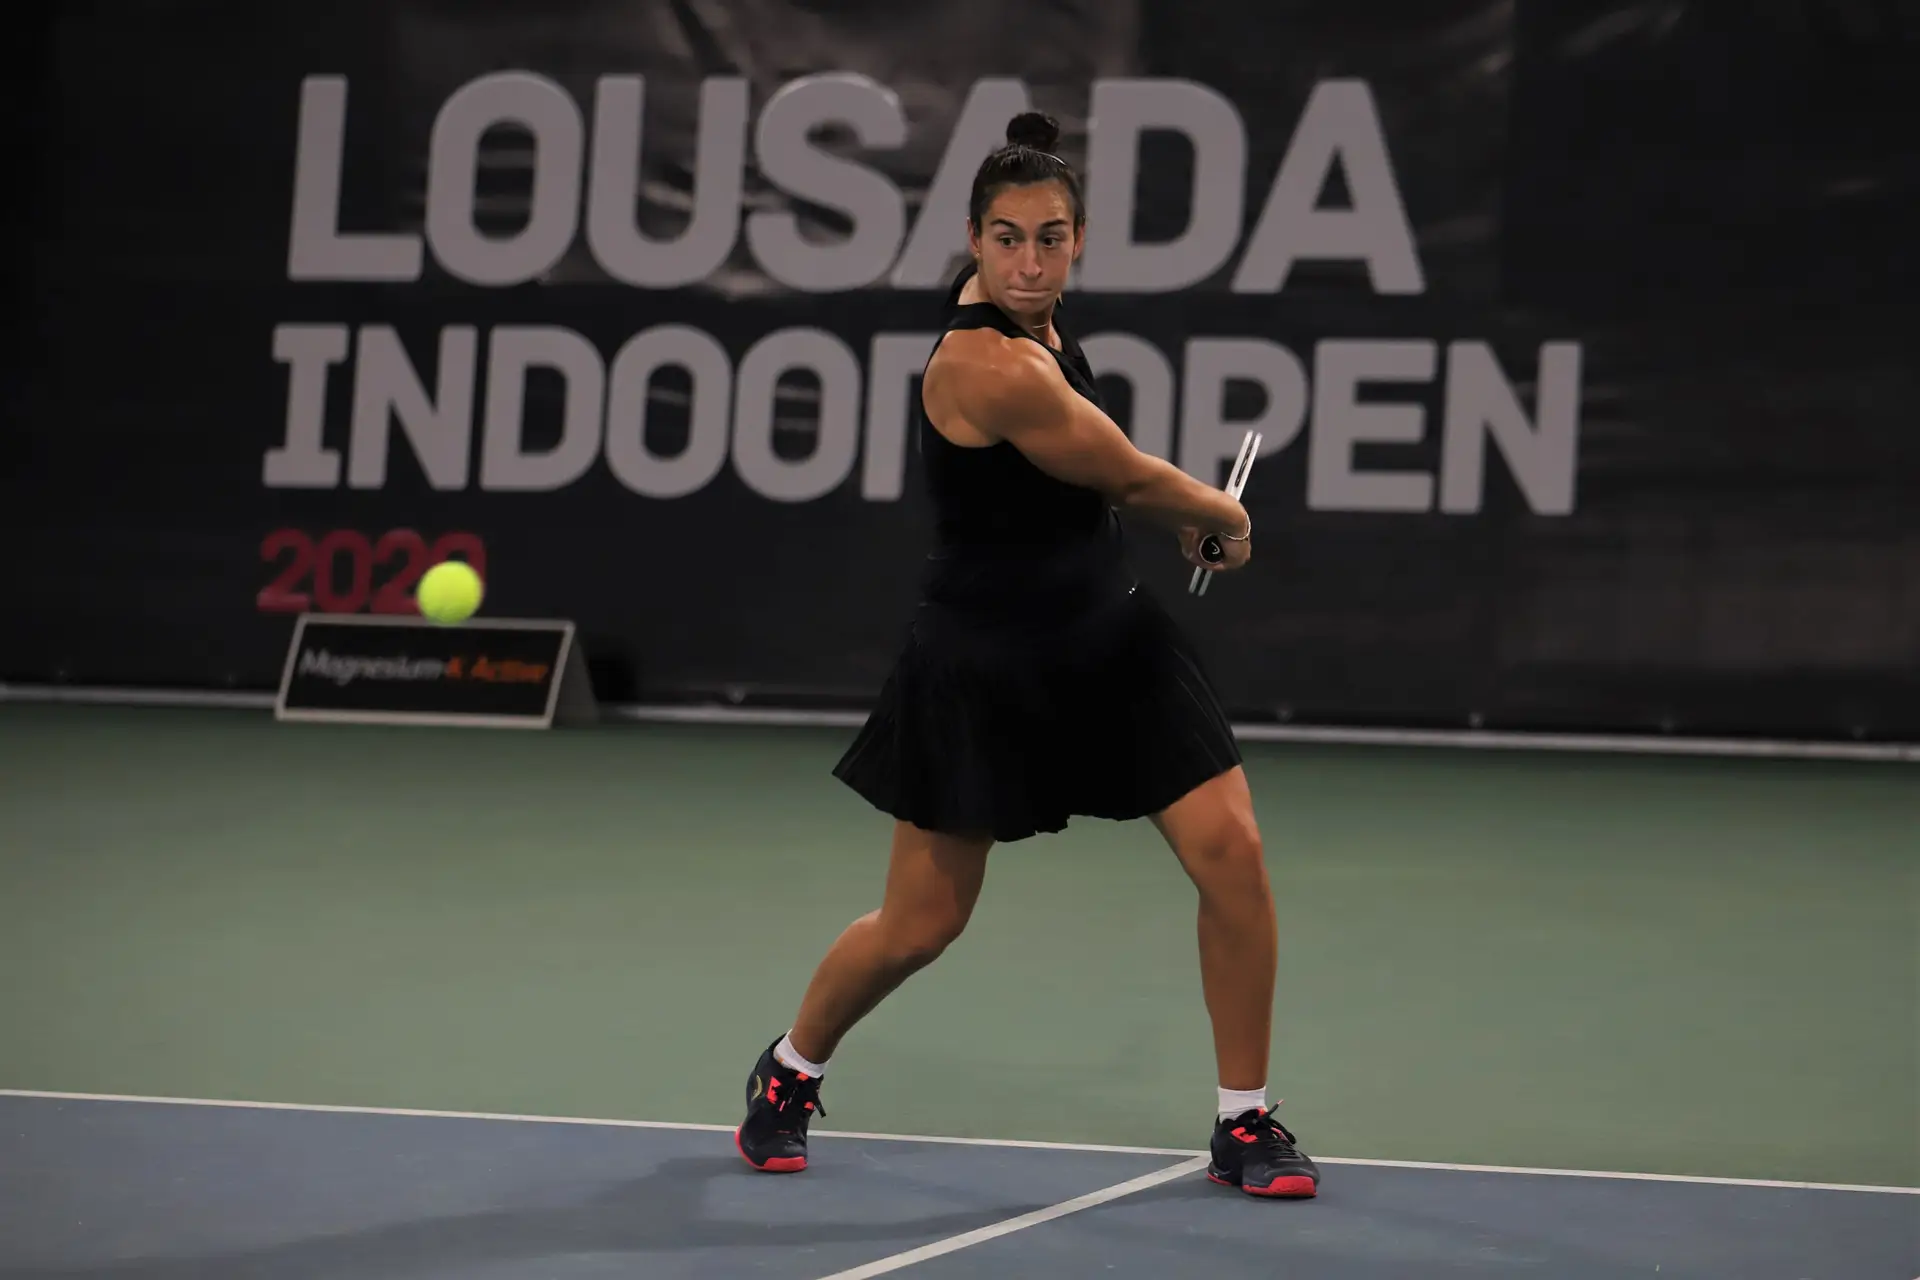 15,000$ Lousada, Portugal, Oct26, winner Susan Bandecchi; S.Bandecchi/L.Salden Tennis Forum